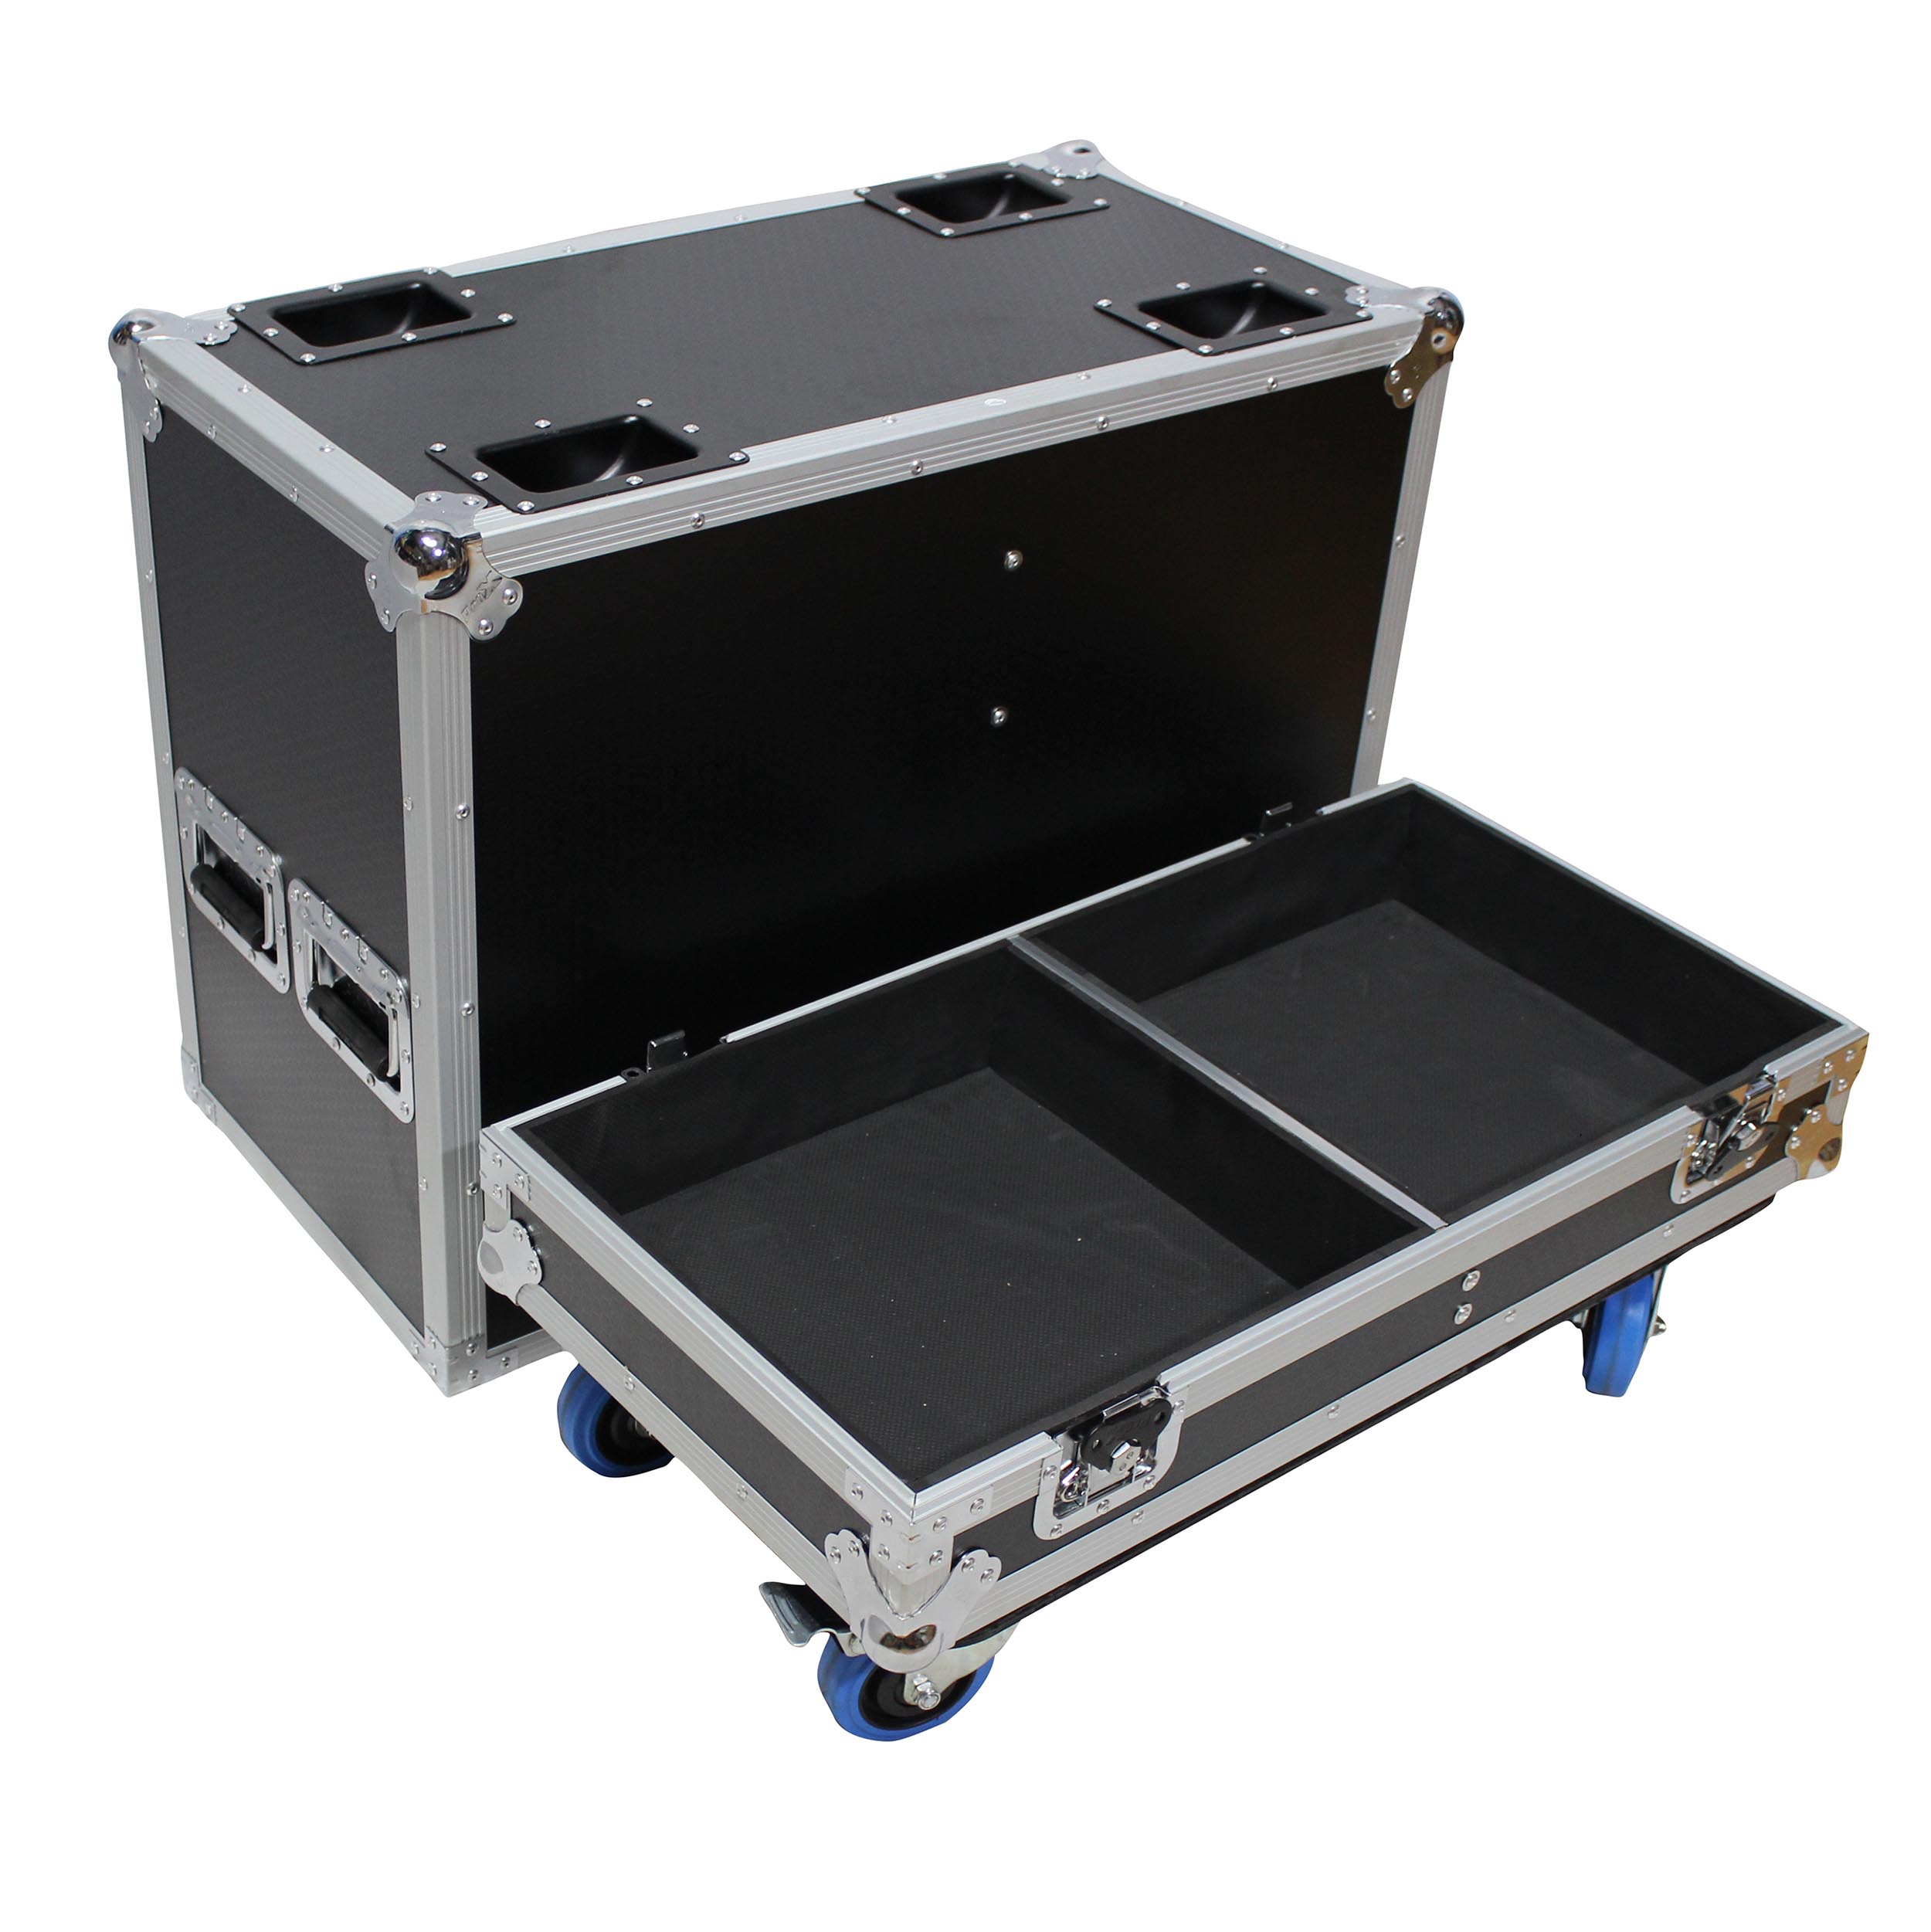 FCP 12 U Flight Case 12U + Incline Plan 10U Flight case rack Power acoustics